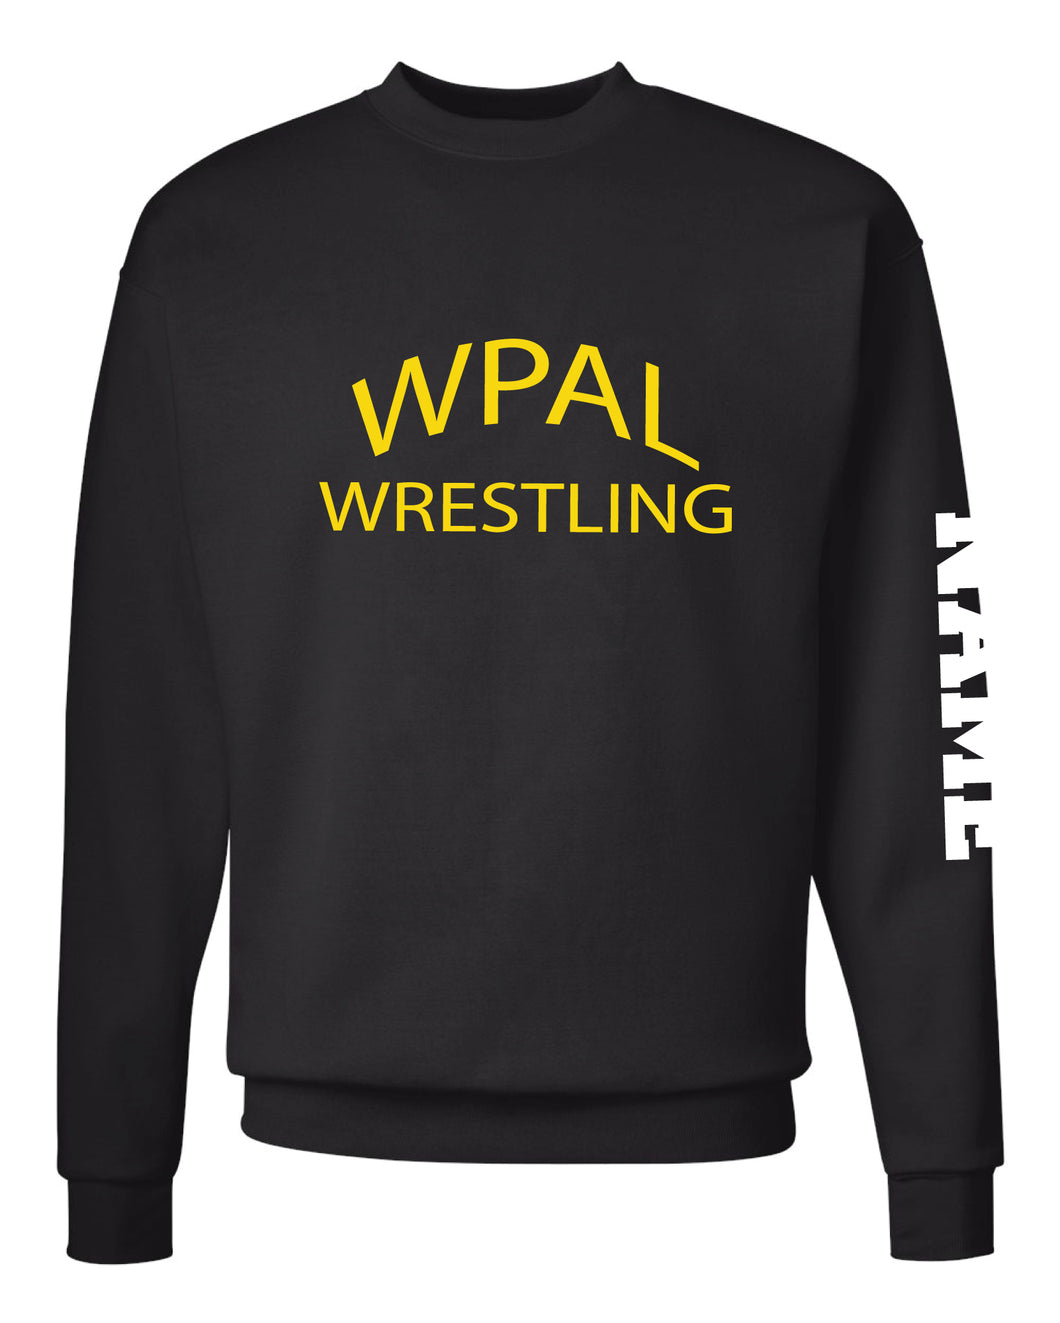 WPAL Wrestling Crewneck Sweatshirt - Black - 5KounT